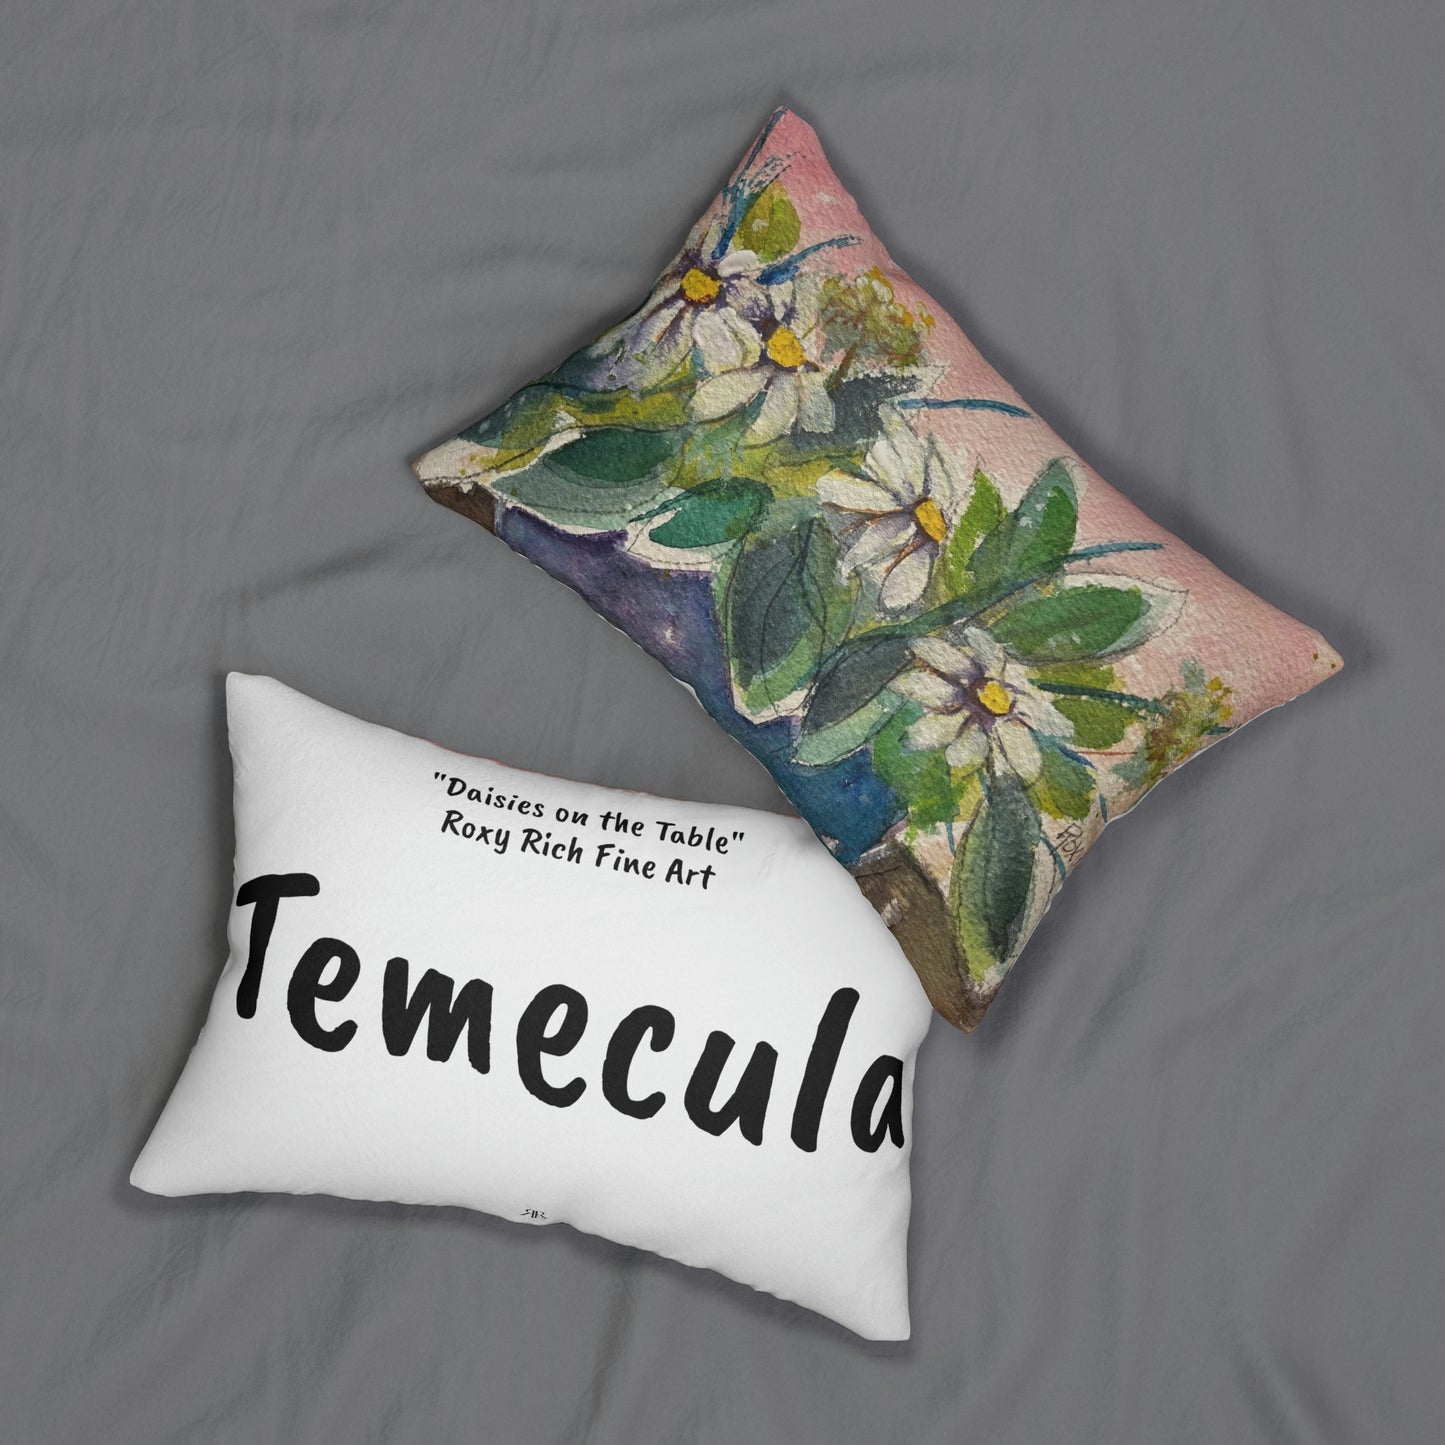 Almohada lumbar Temecula con "Daisies on the Table" Roxy Rich Fine Art y "Temecula"